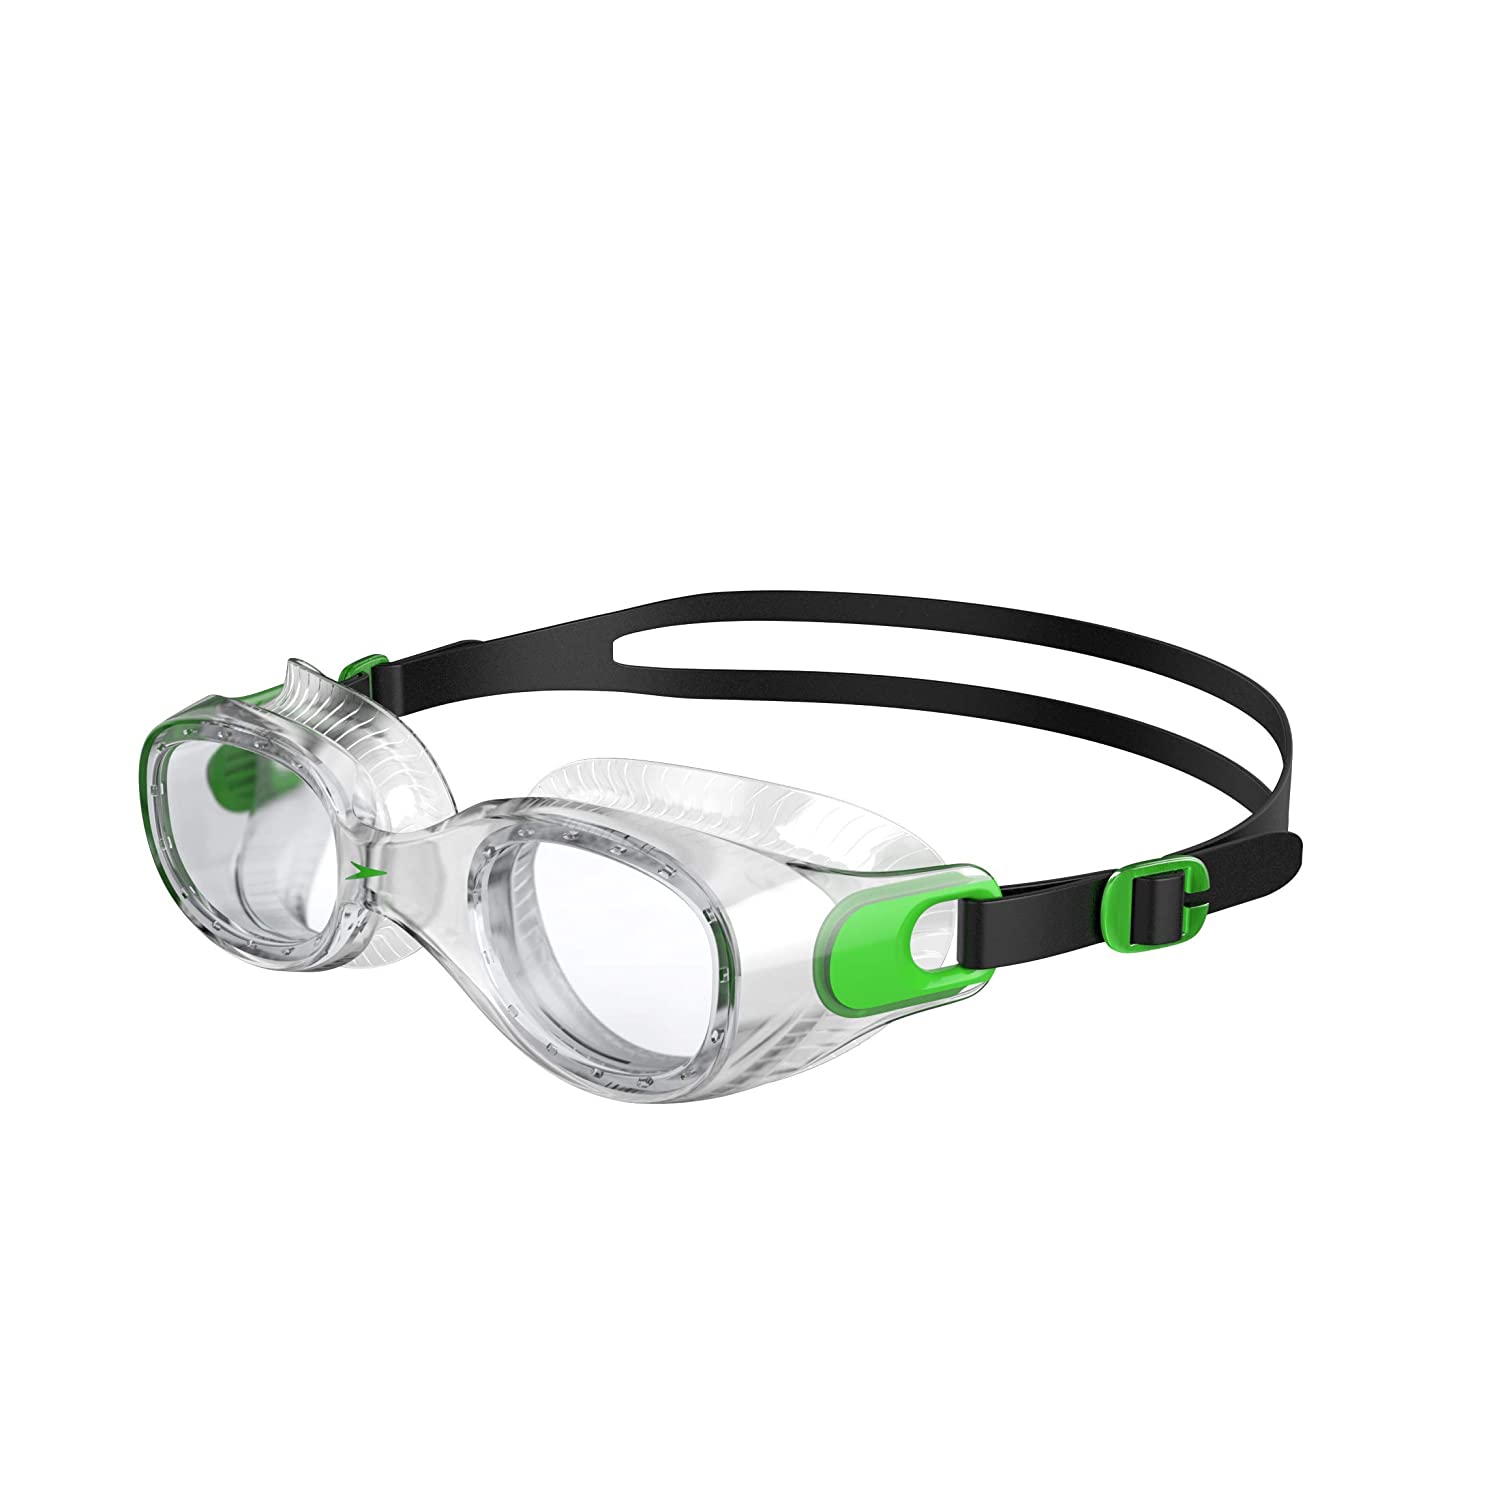 Speedo 810898B568 Futura Classic Goggles, Green/Clear - Best Price online Prokicksports.com